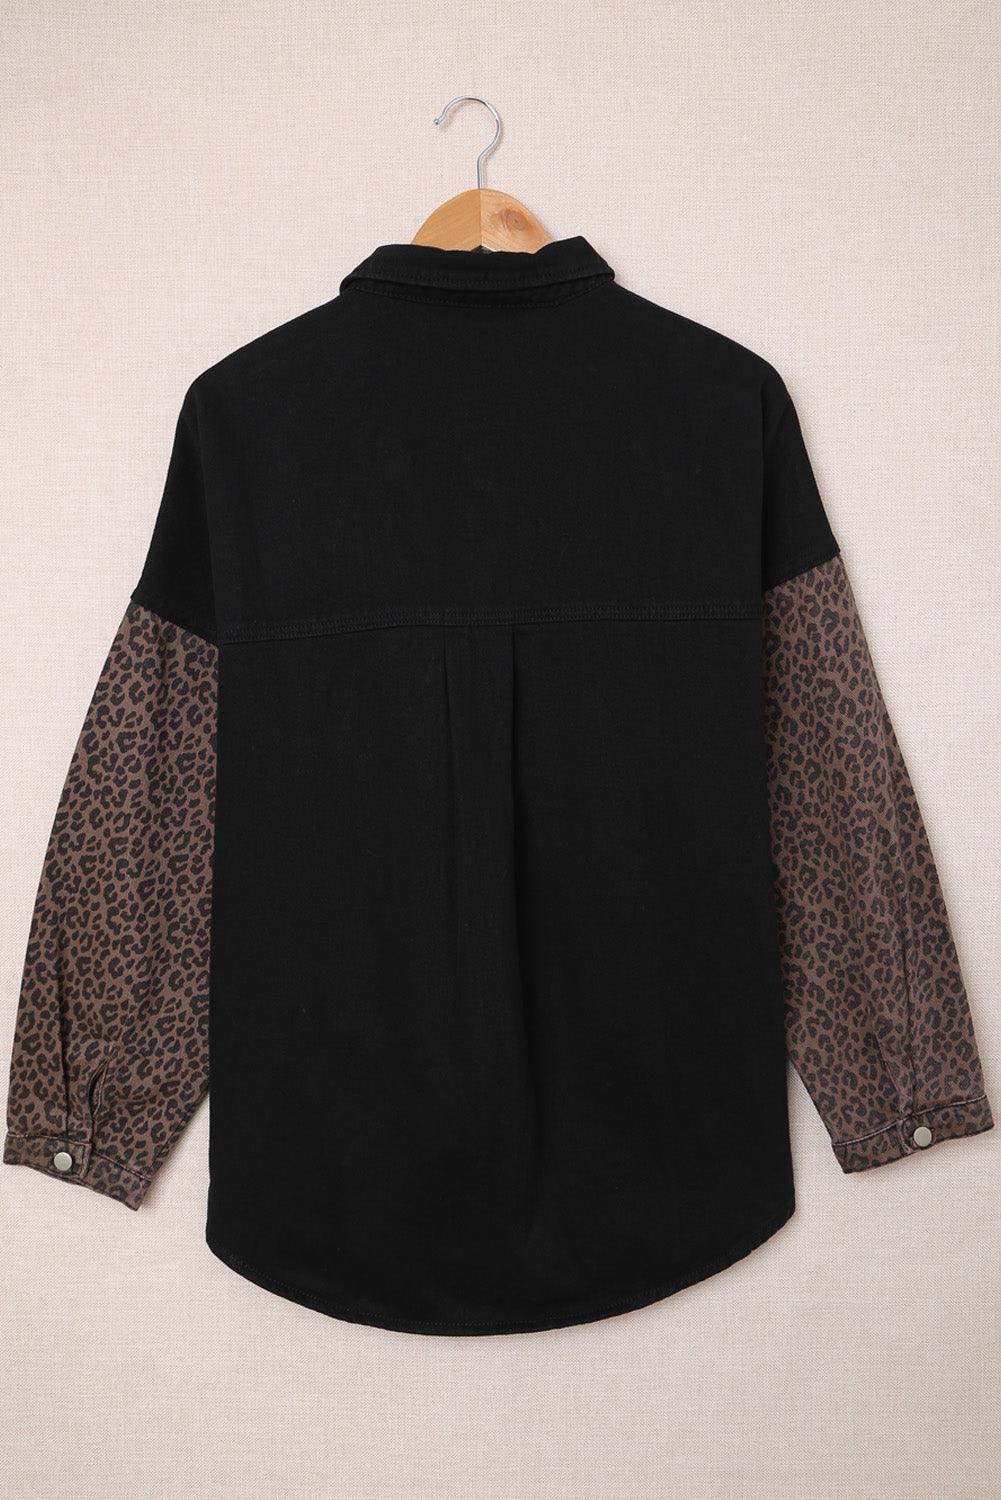 Blank Apparel - Black Contrast Leopard Denim Jacket